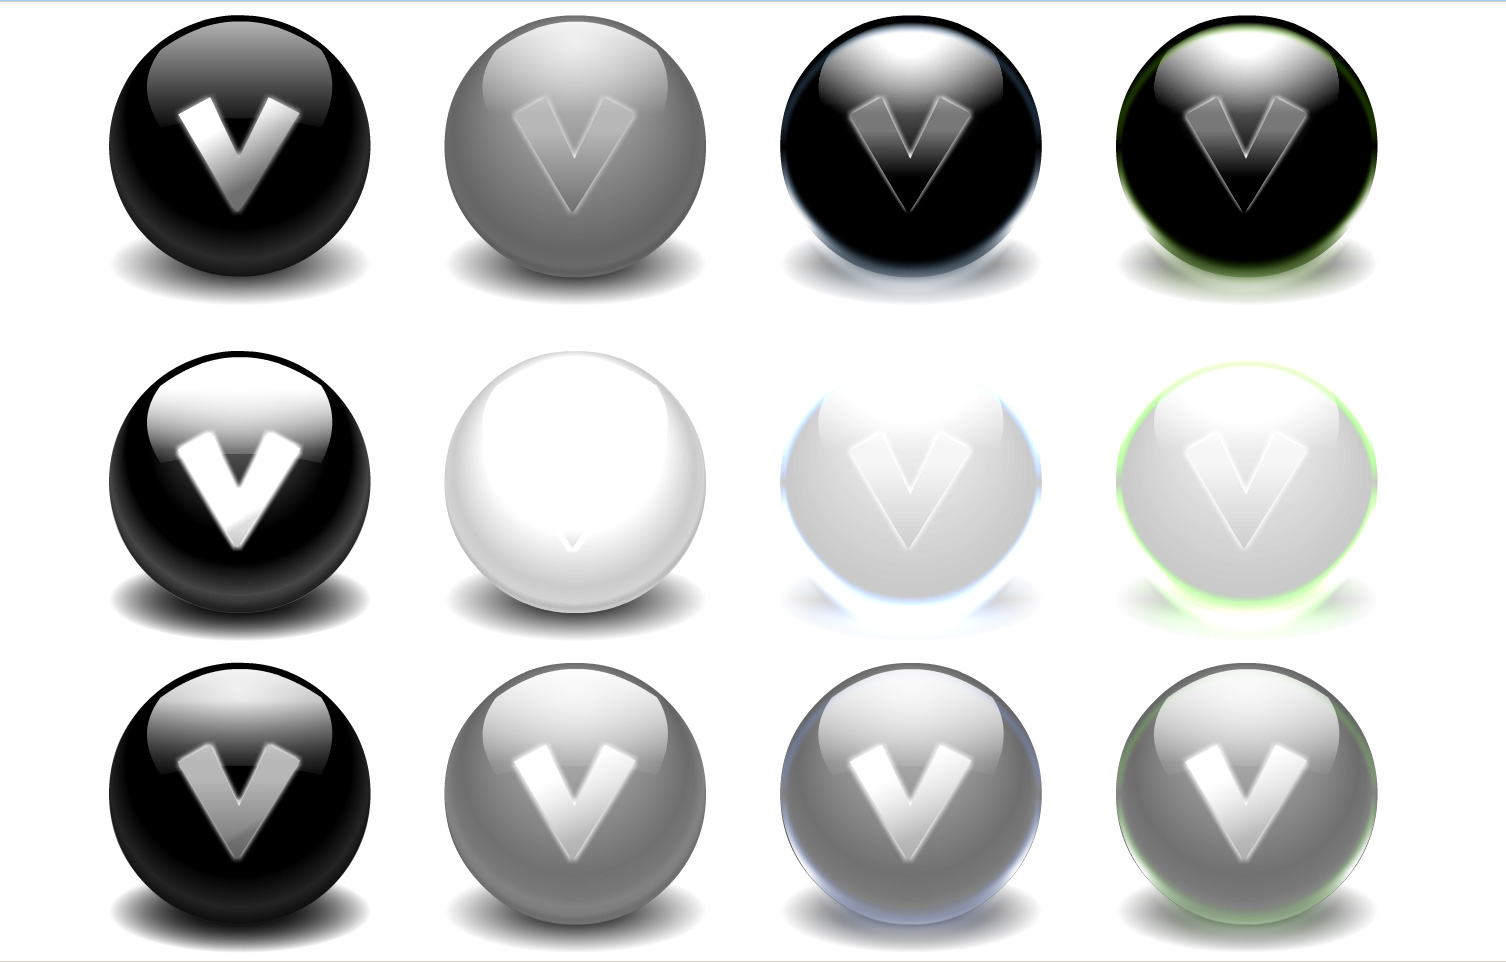 V - vagary 3D flash ball